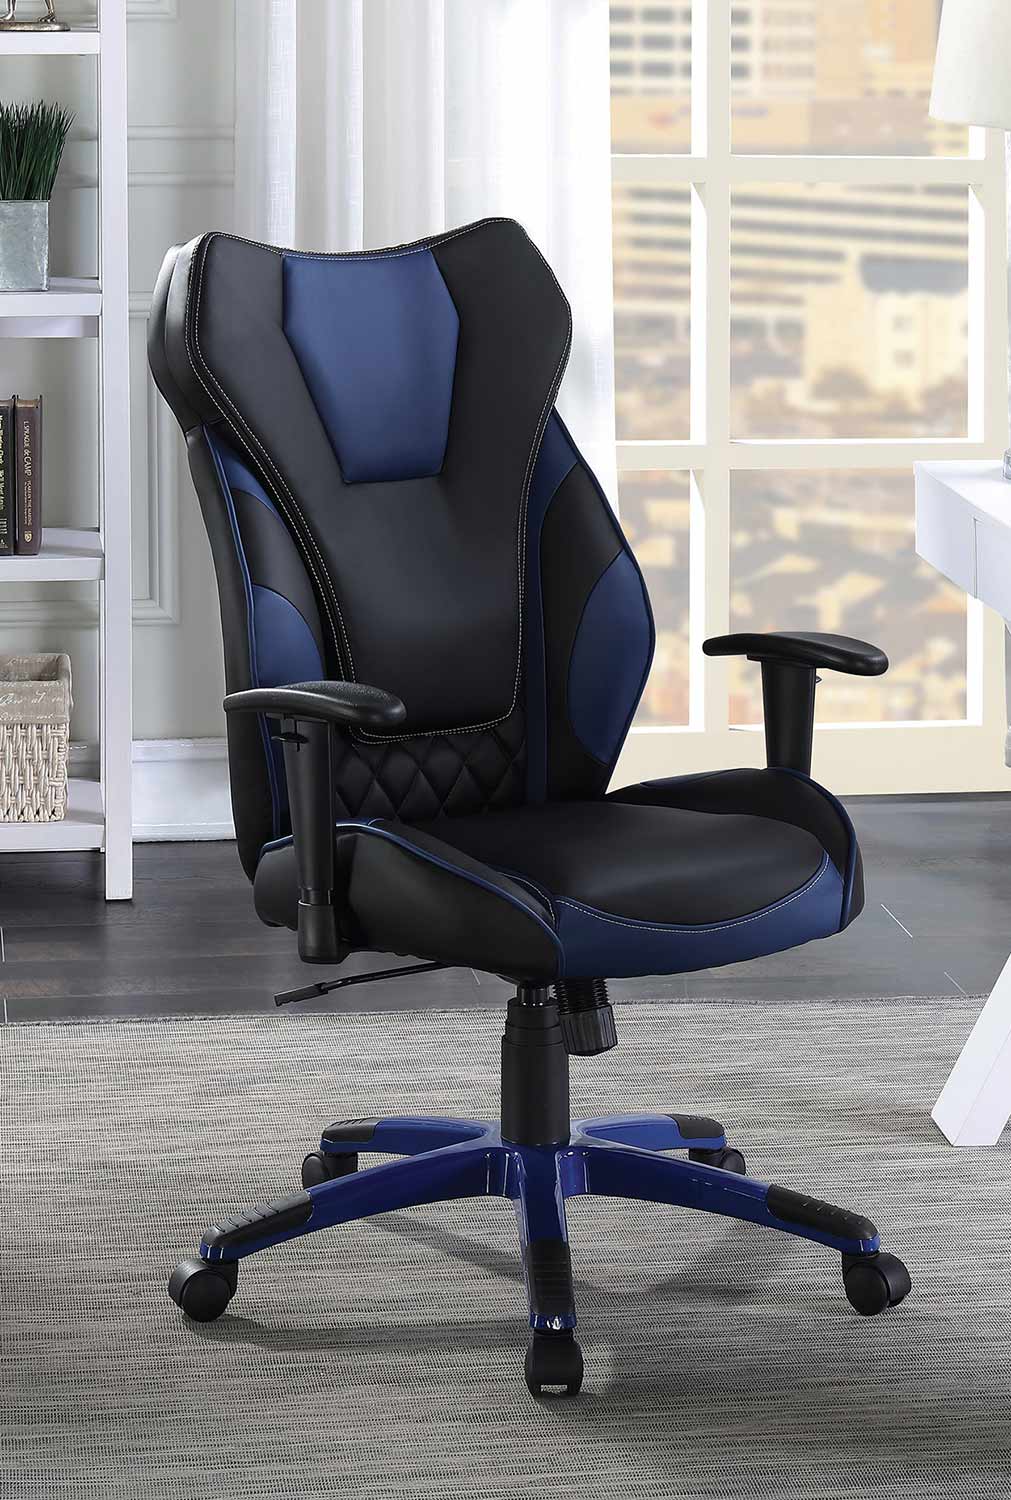 Coaster 801468 Office Chair - Black/Blue